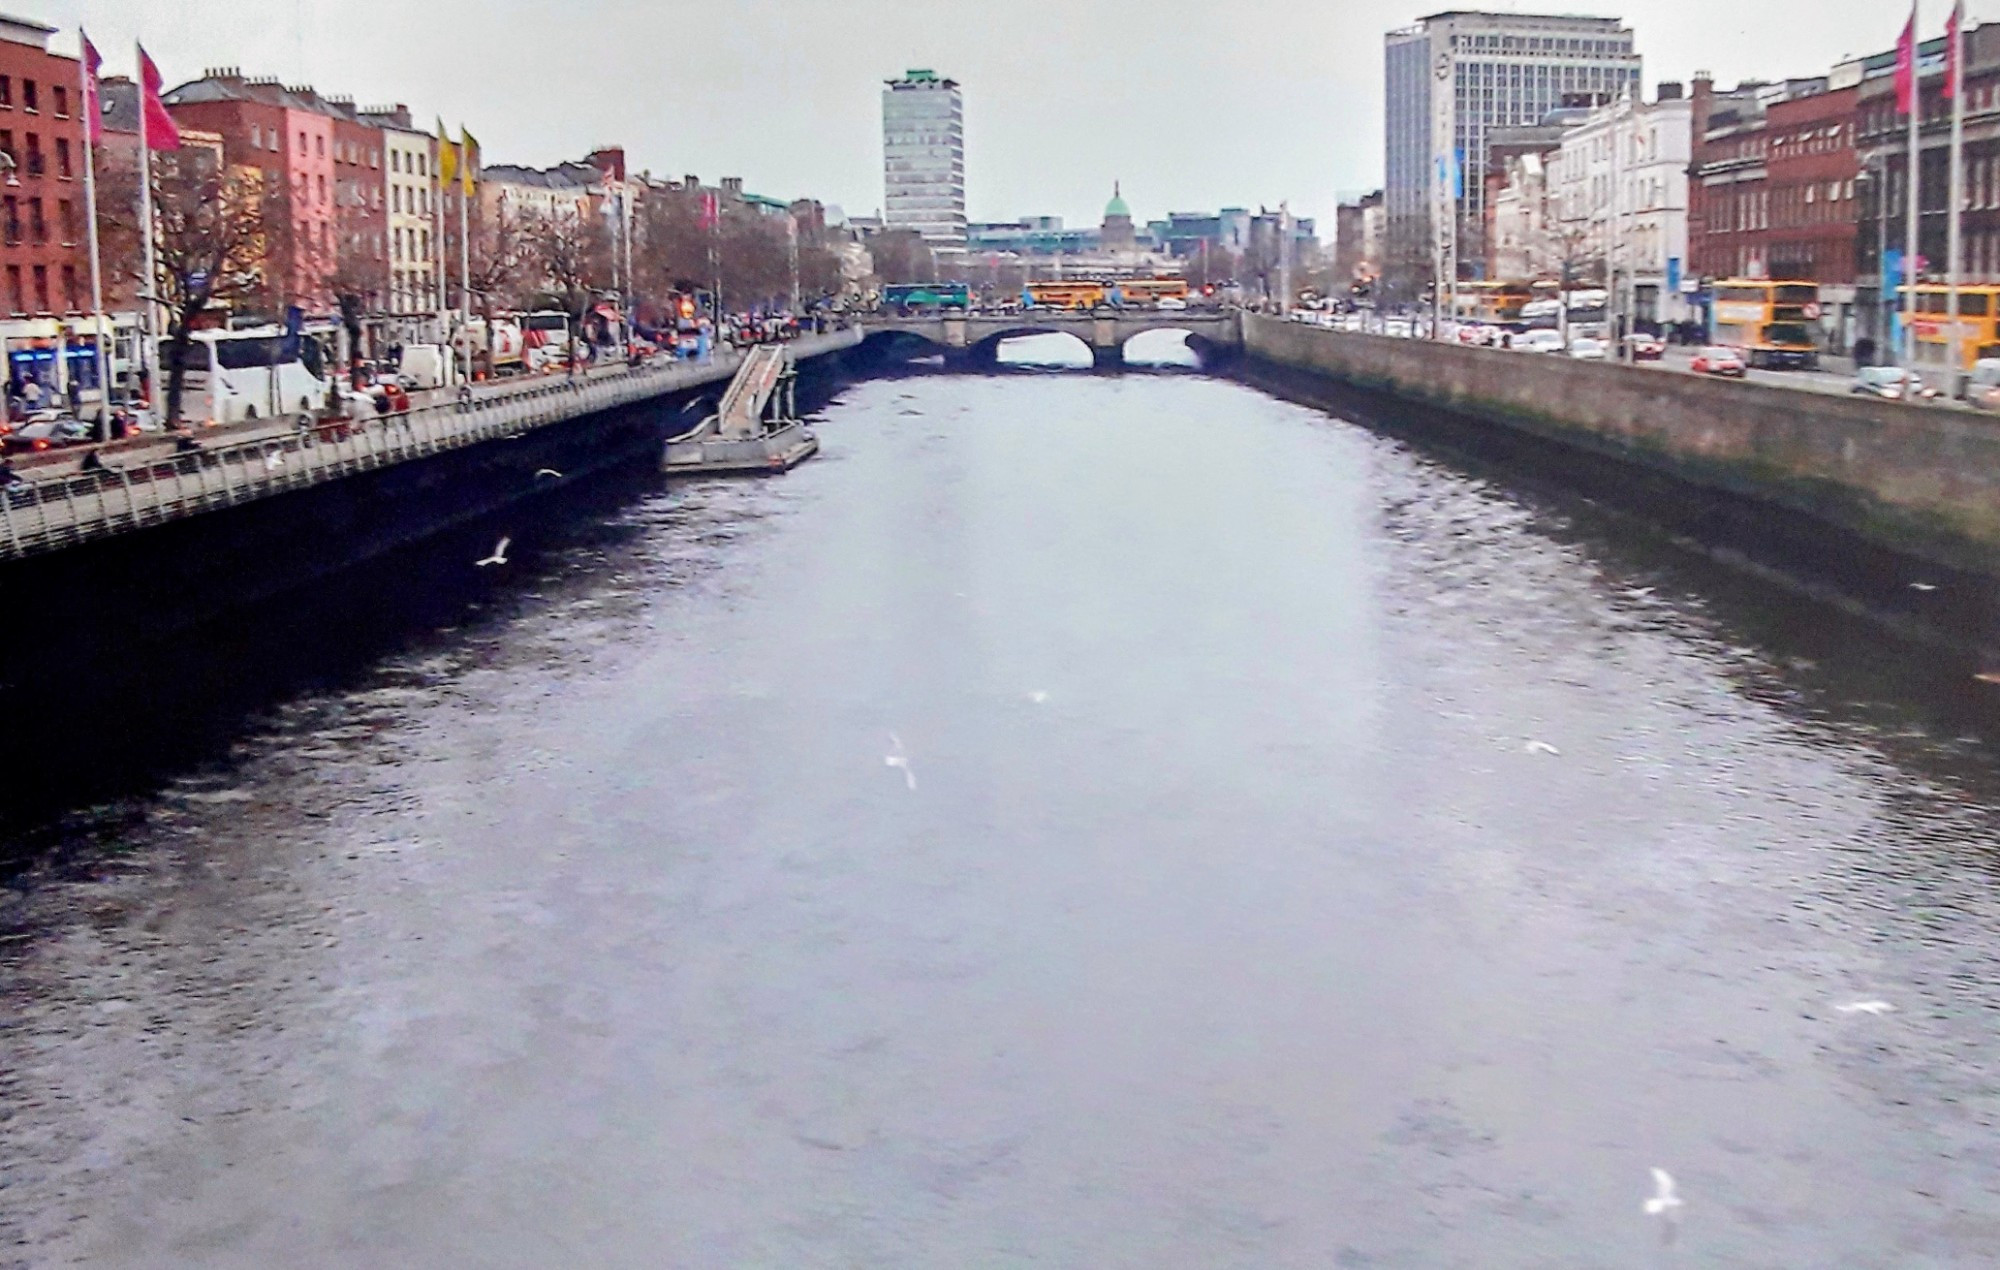 The River Liffey, Dublin